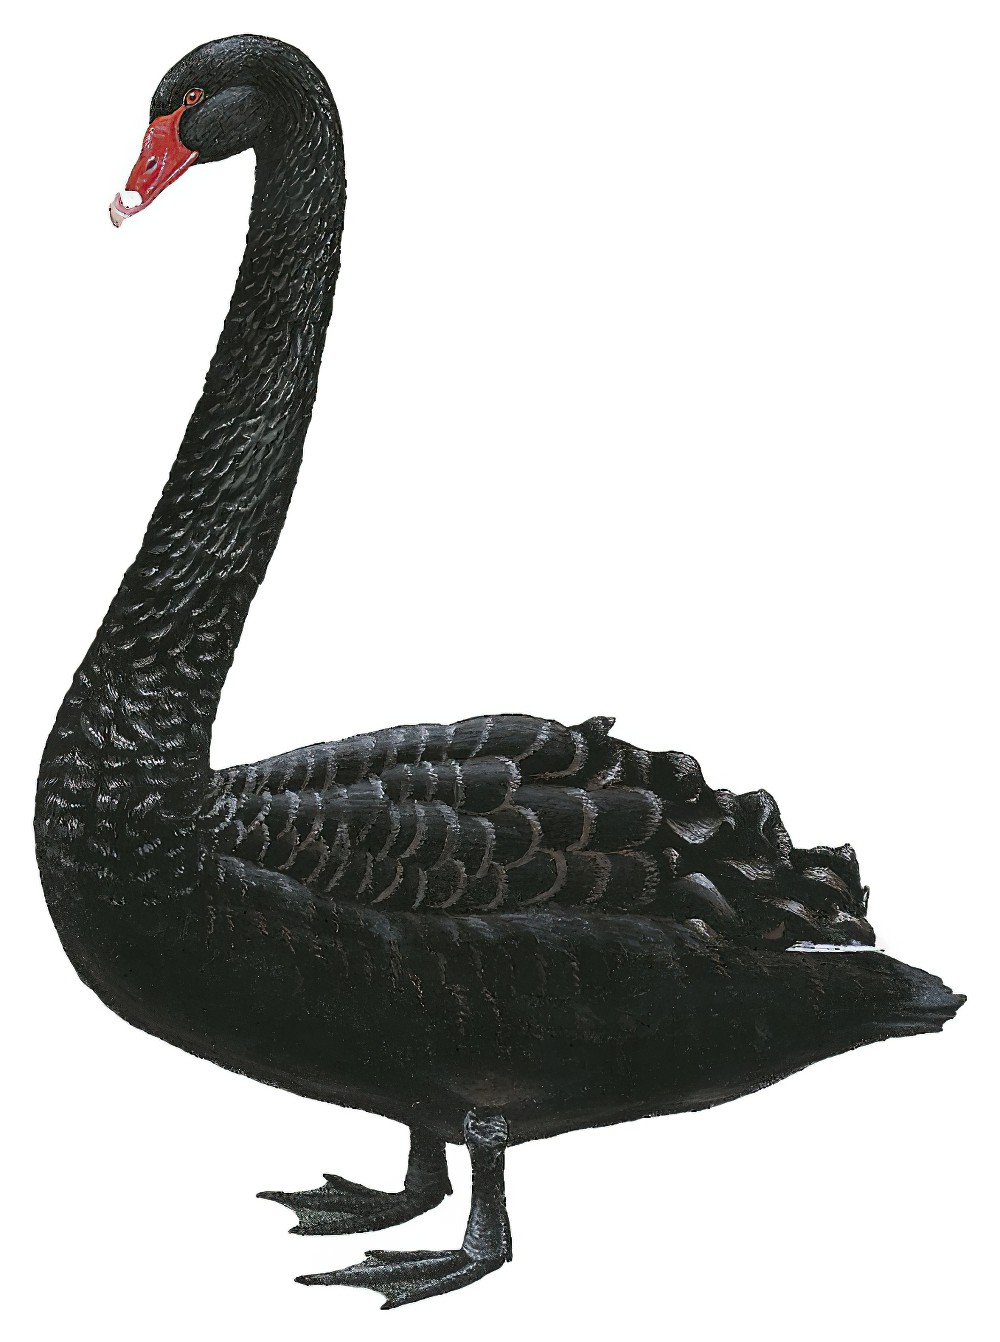 Black Swan / Cygnus atratus